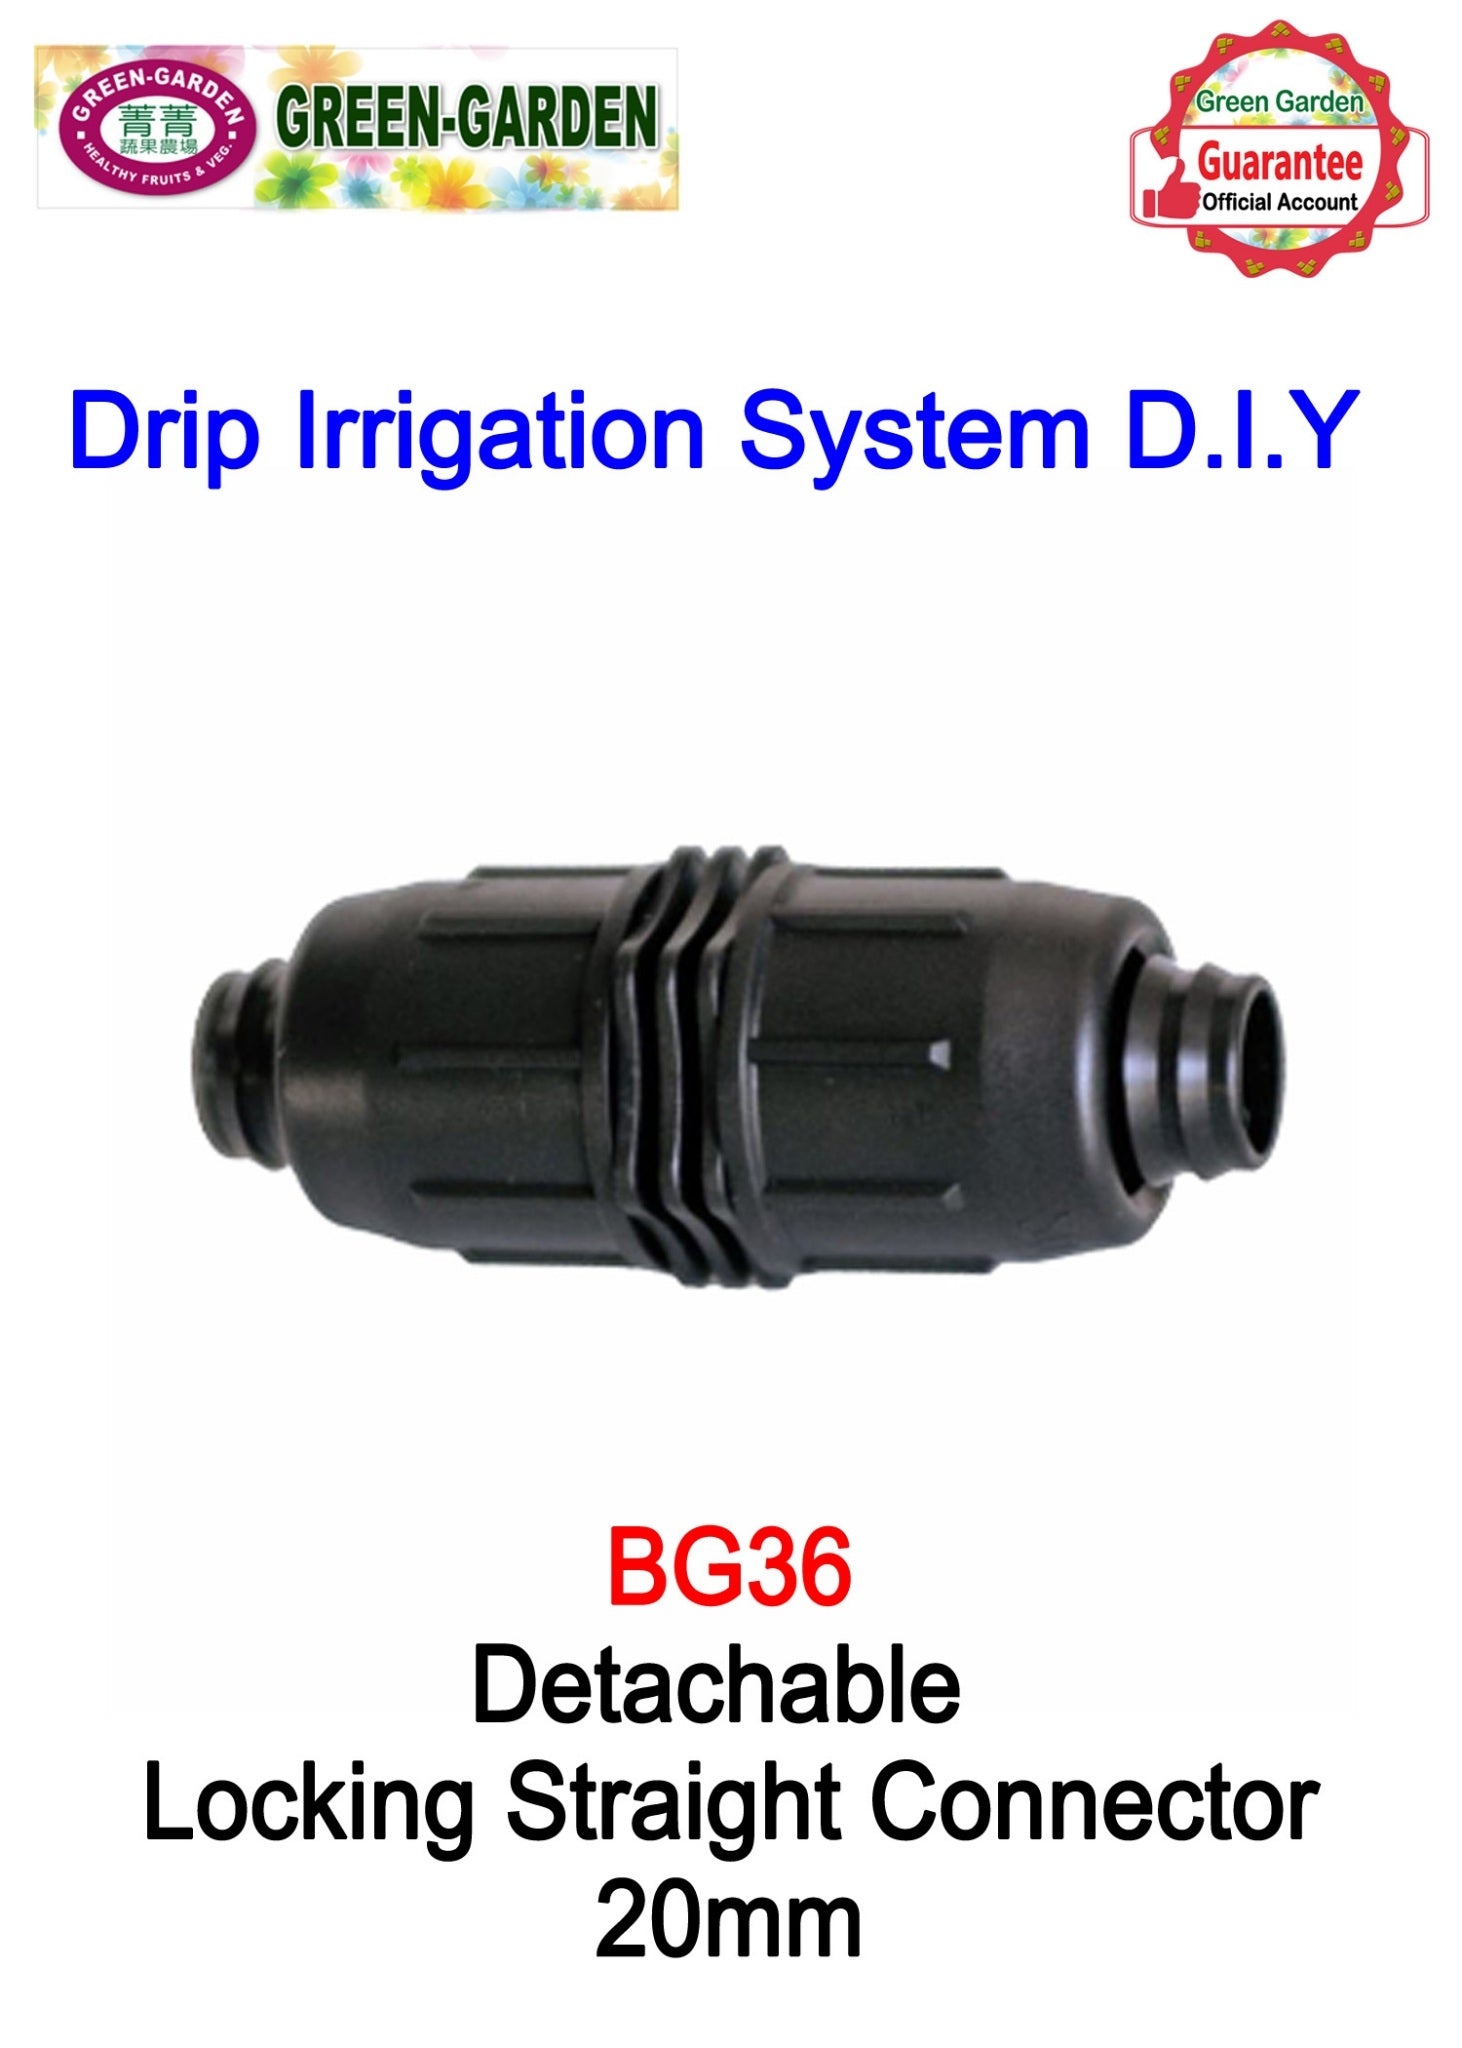 Drip Irrigation System - 20mm Detachable Locking Straight Connector BG36